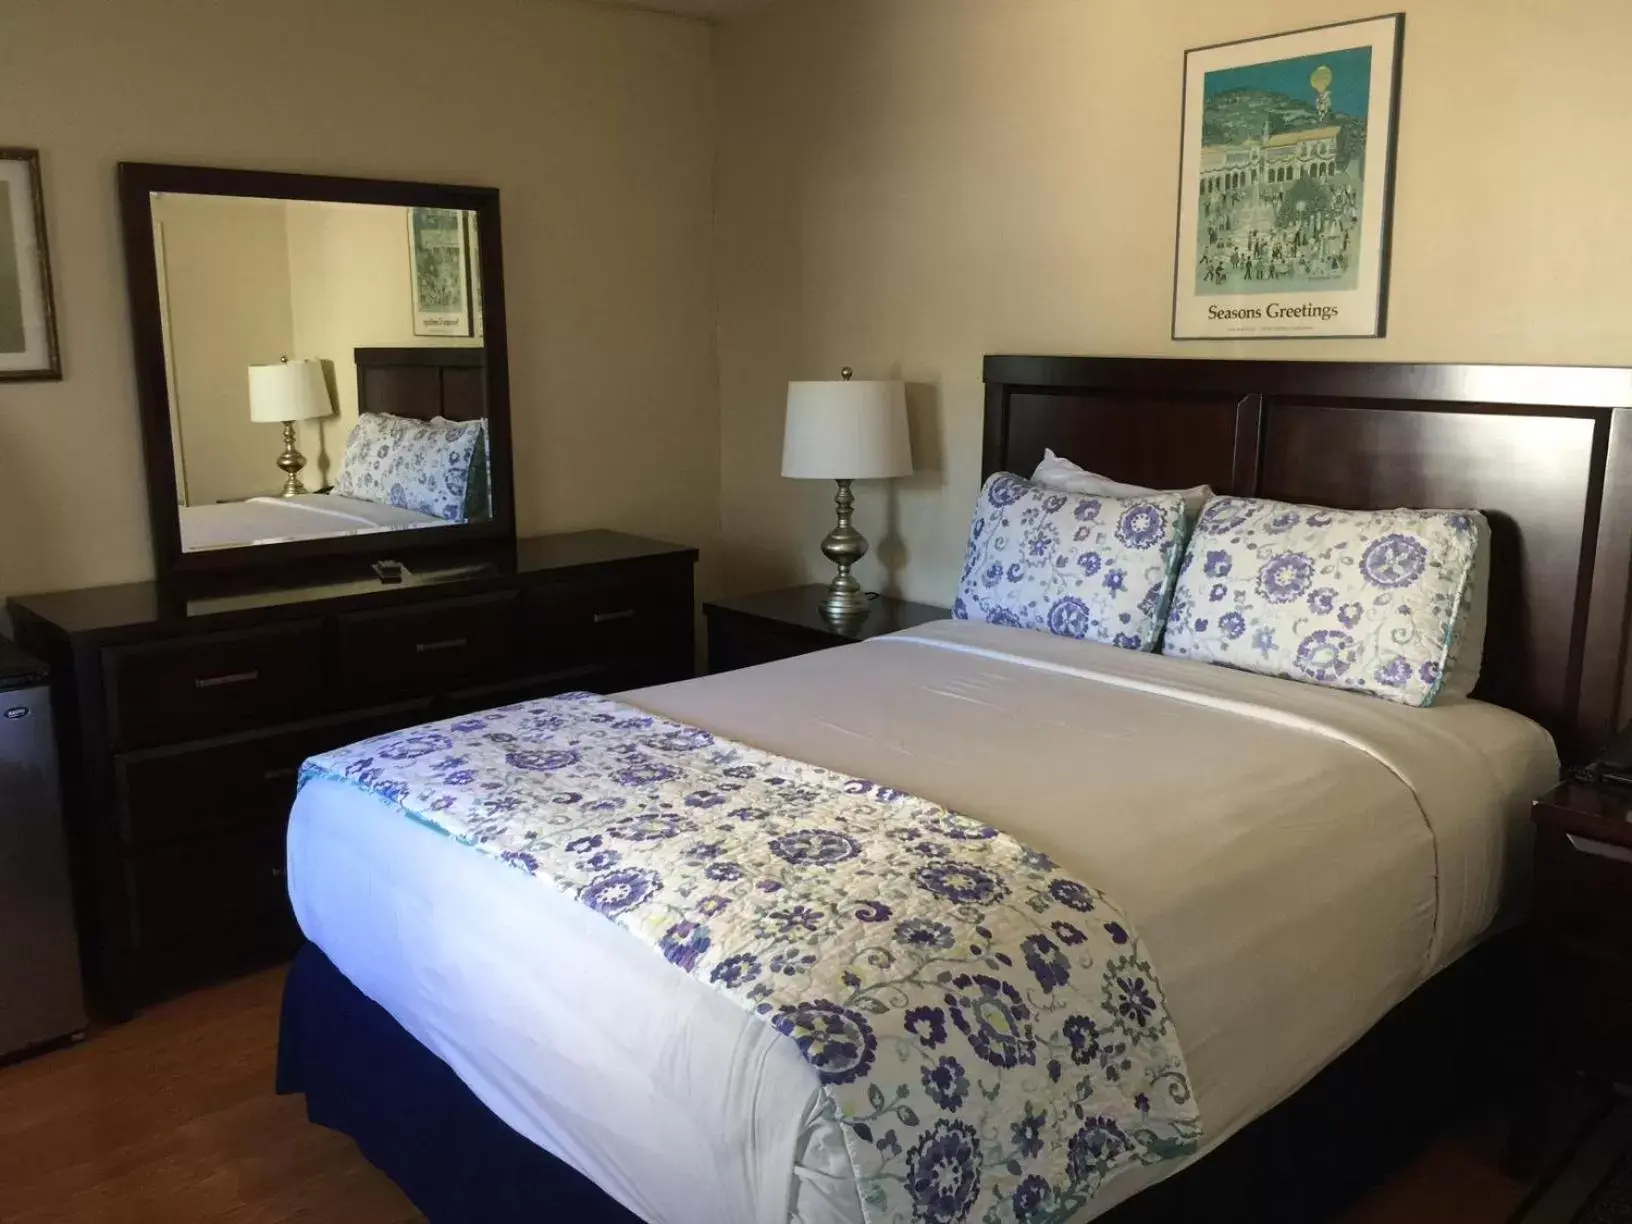 Bed, Room Photo in Ocean Park Inn